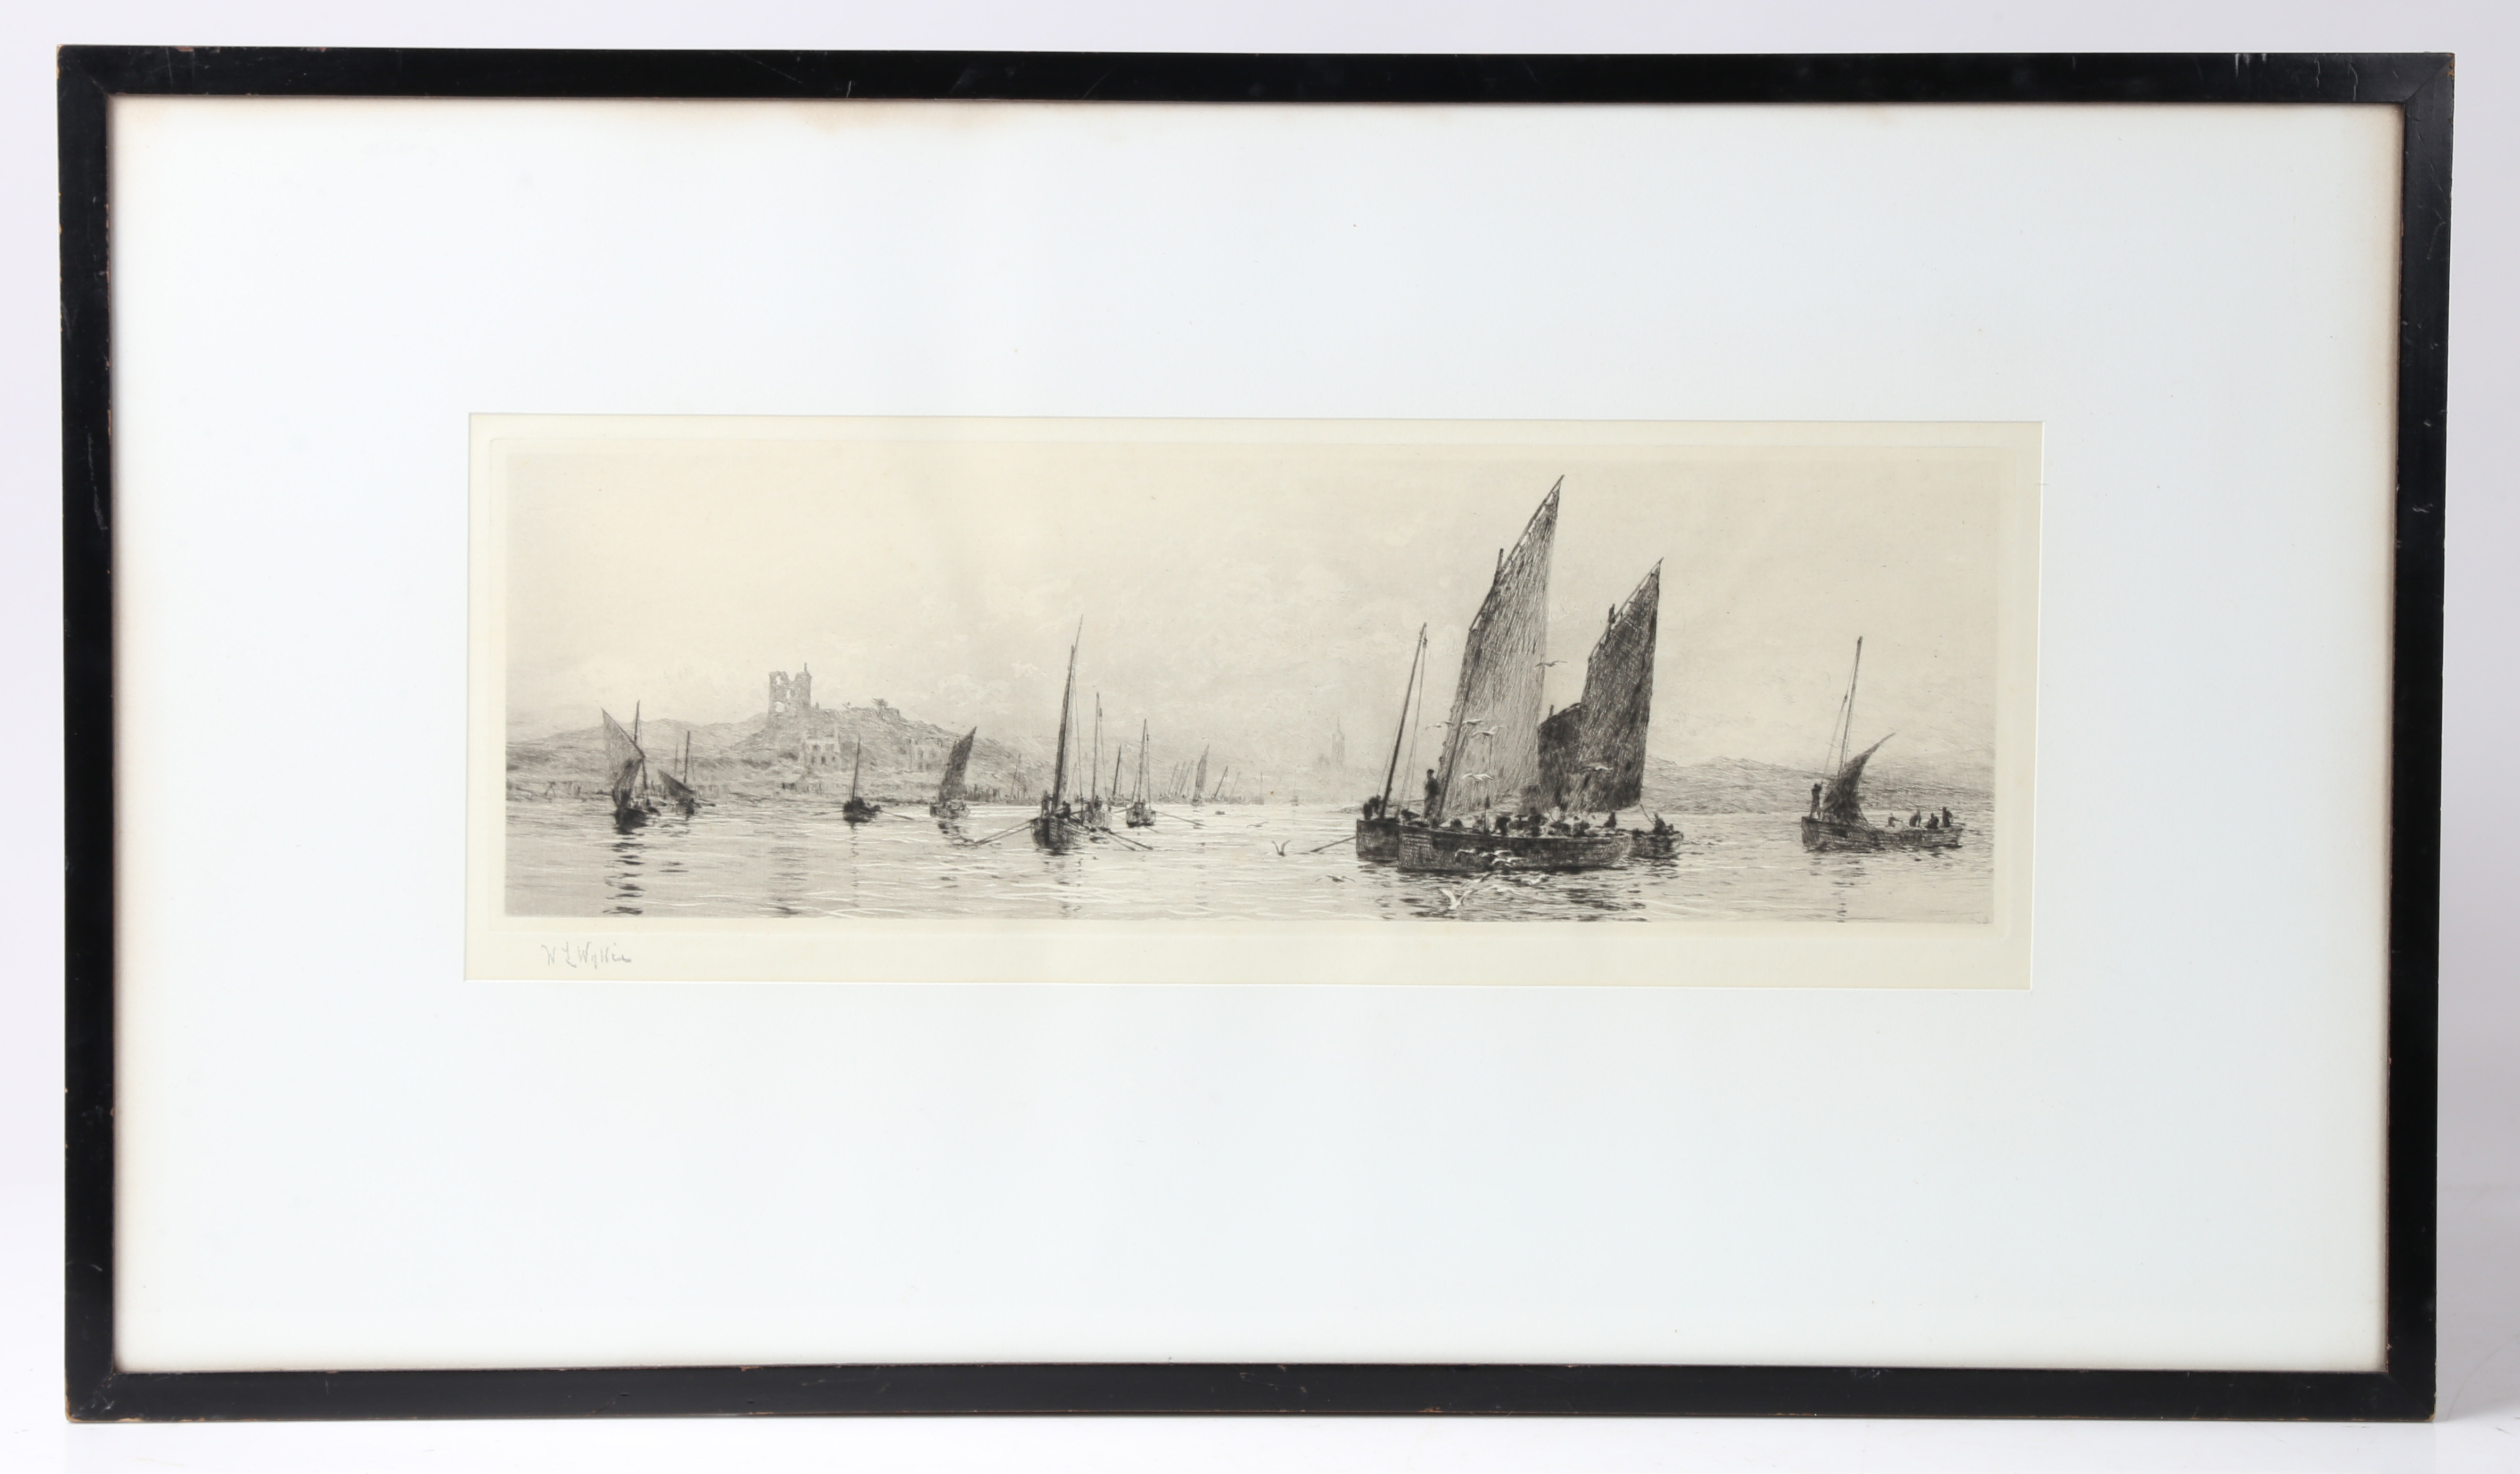 WILLIAM LIONEL WYLLIE, RA, RE, (BRITISH, 1851-1931) "FISHING BOATS IN A BAY".